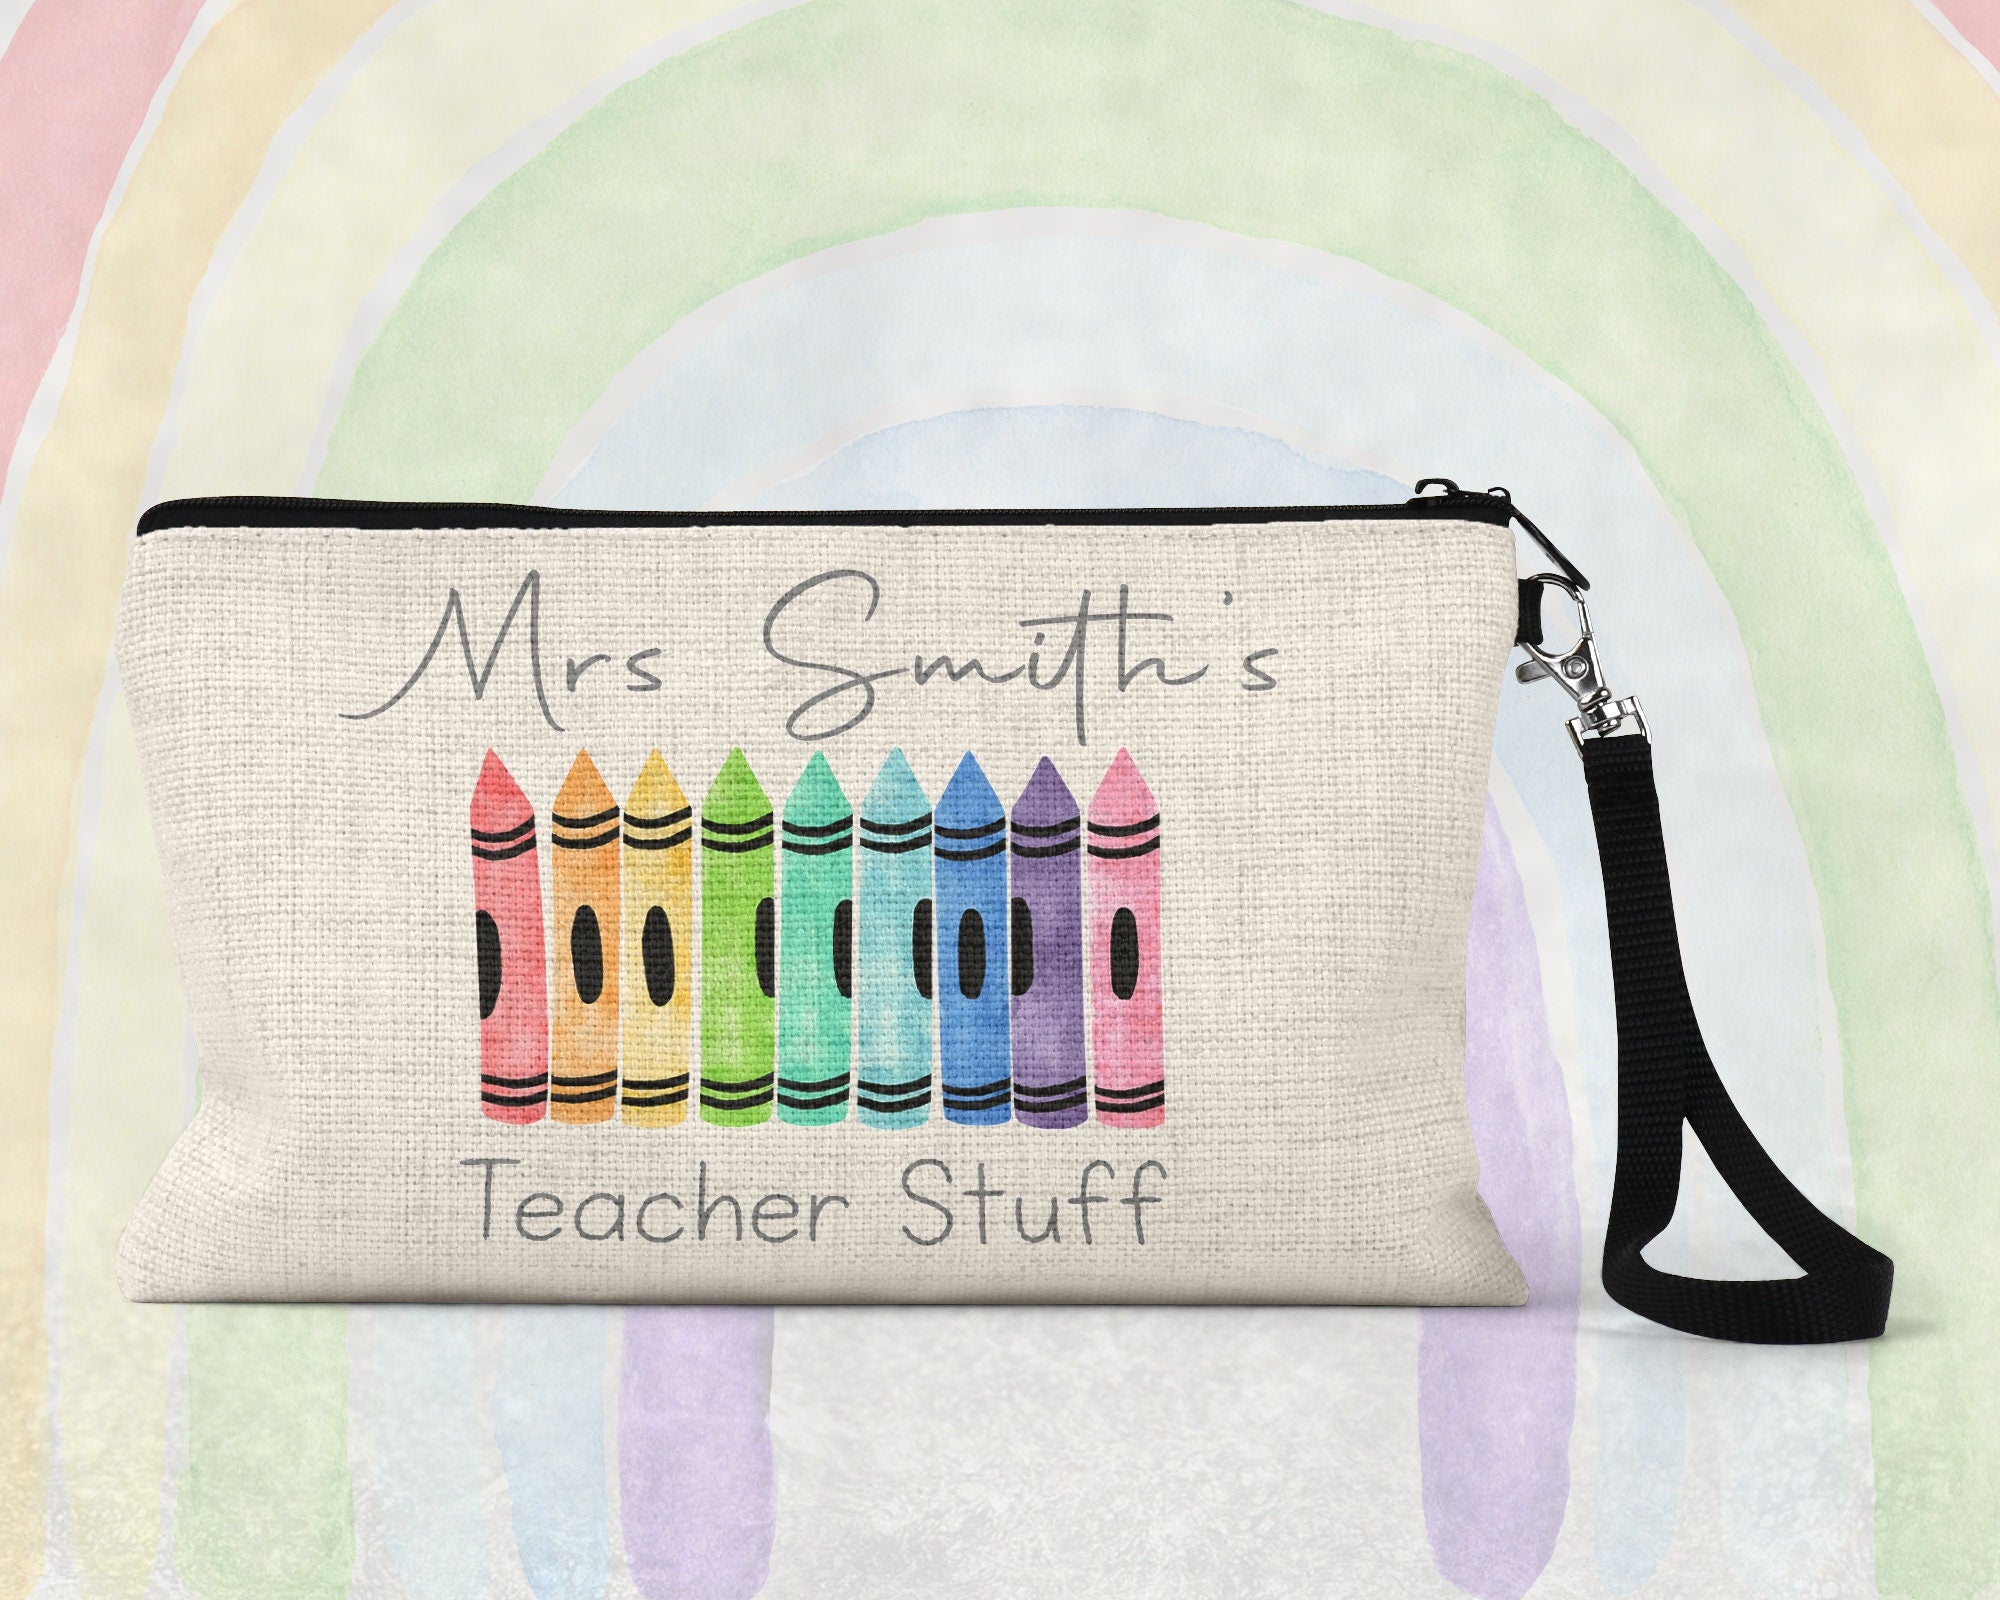 Teacher pencil case, Teacher gift, Teacher end of year gift, Thank you  teacher, personalised pencil case, rainbow gift, End of Term gift